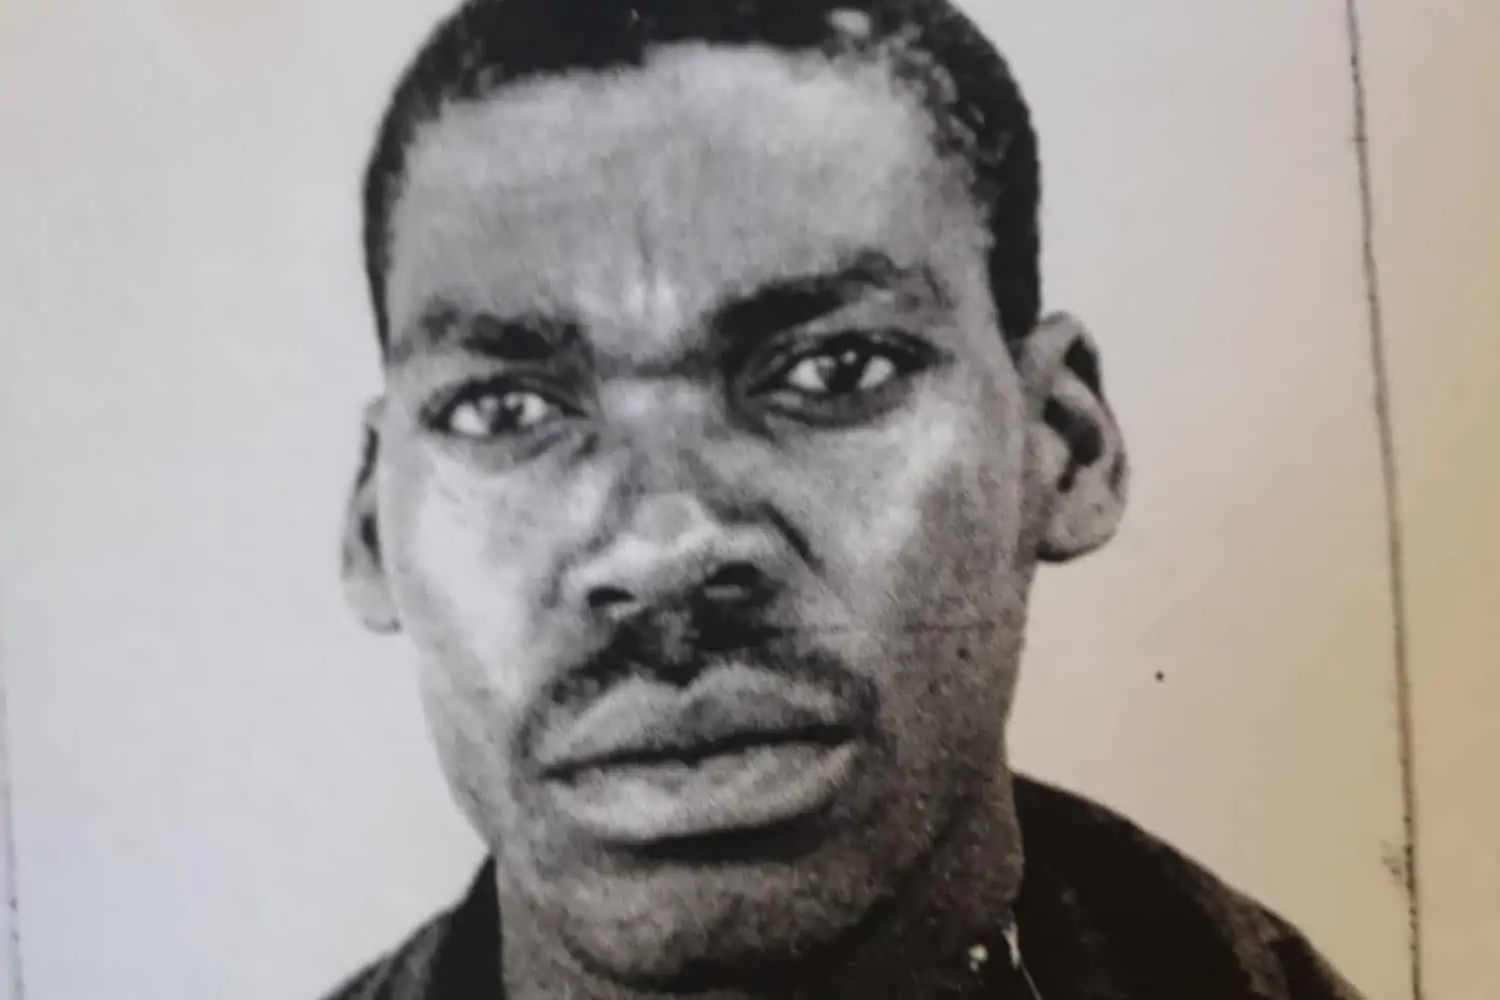 Help Find Missing Man, Tshepo Walter Lesetja